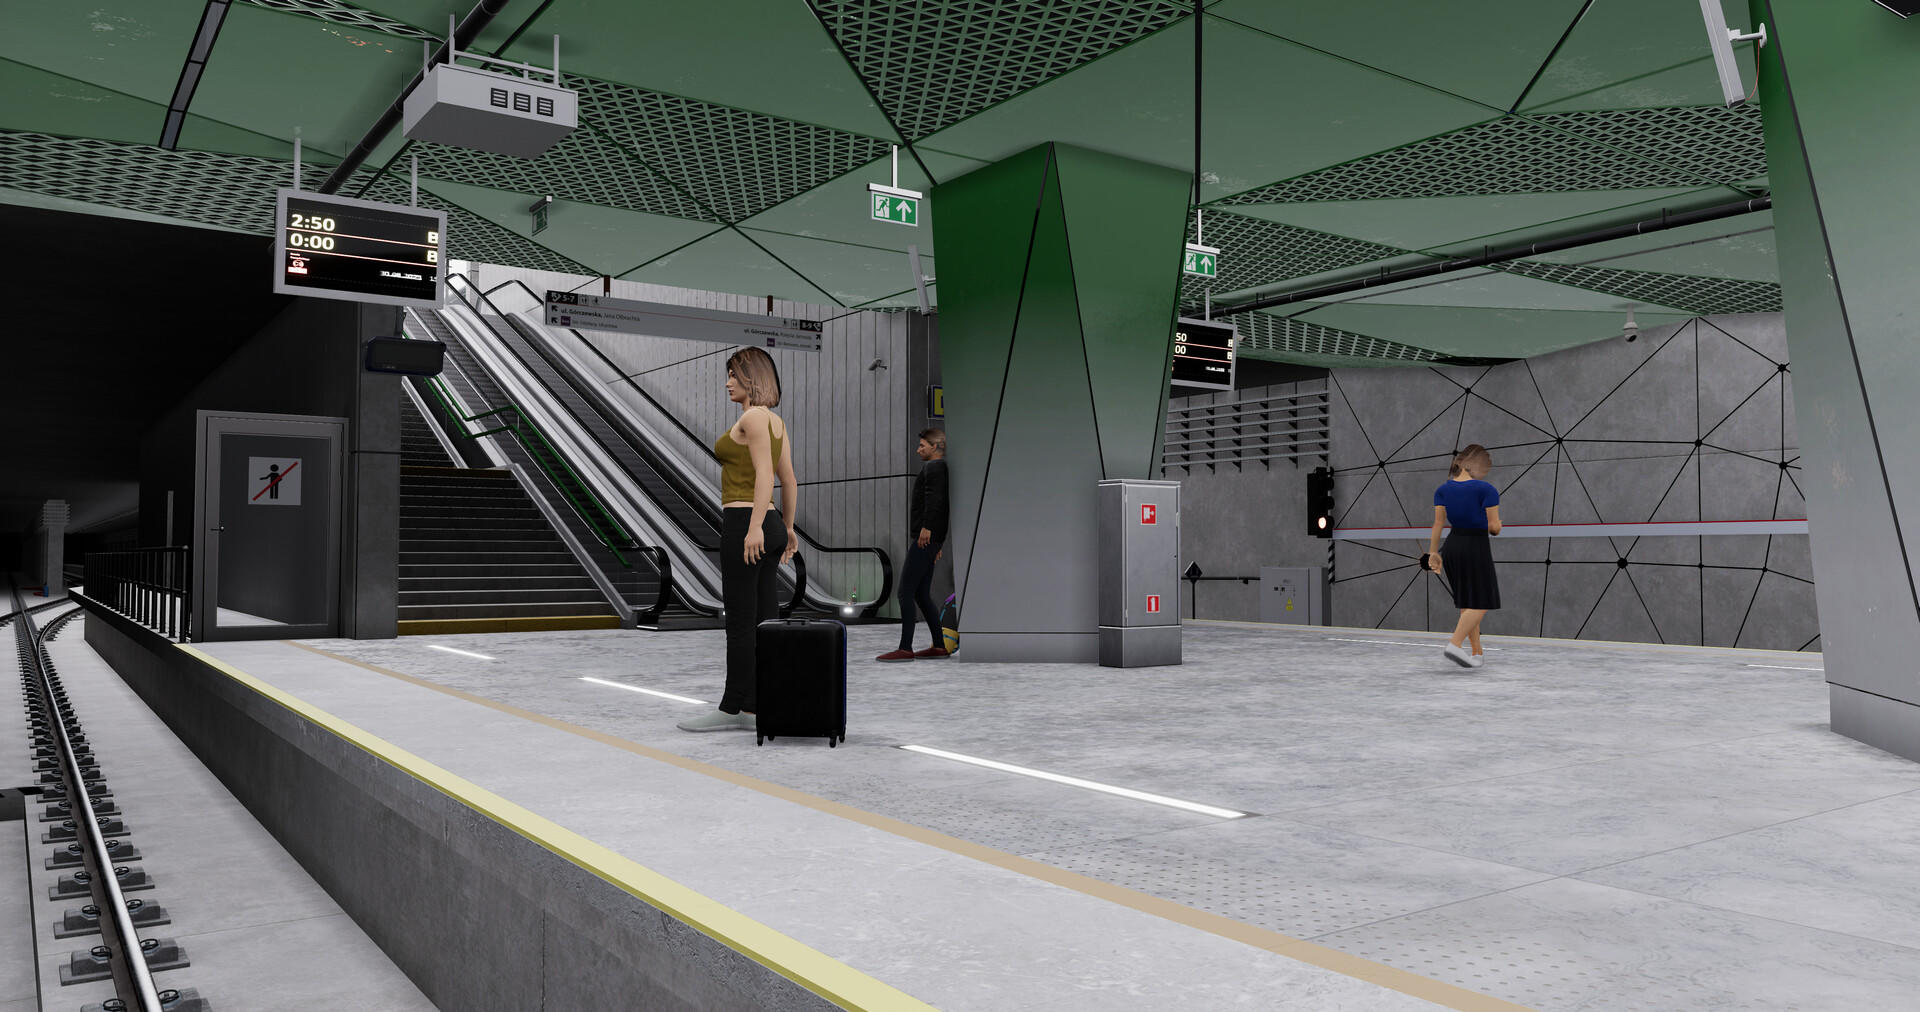 Screenshot 1 of MetroSim - Il simulatore della metropolitana 